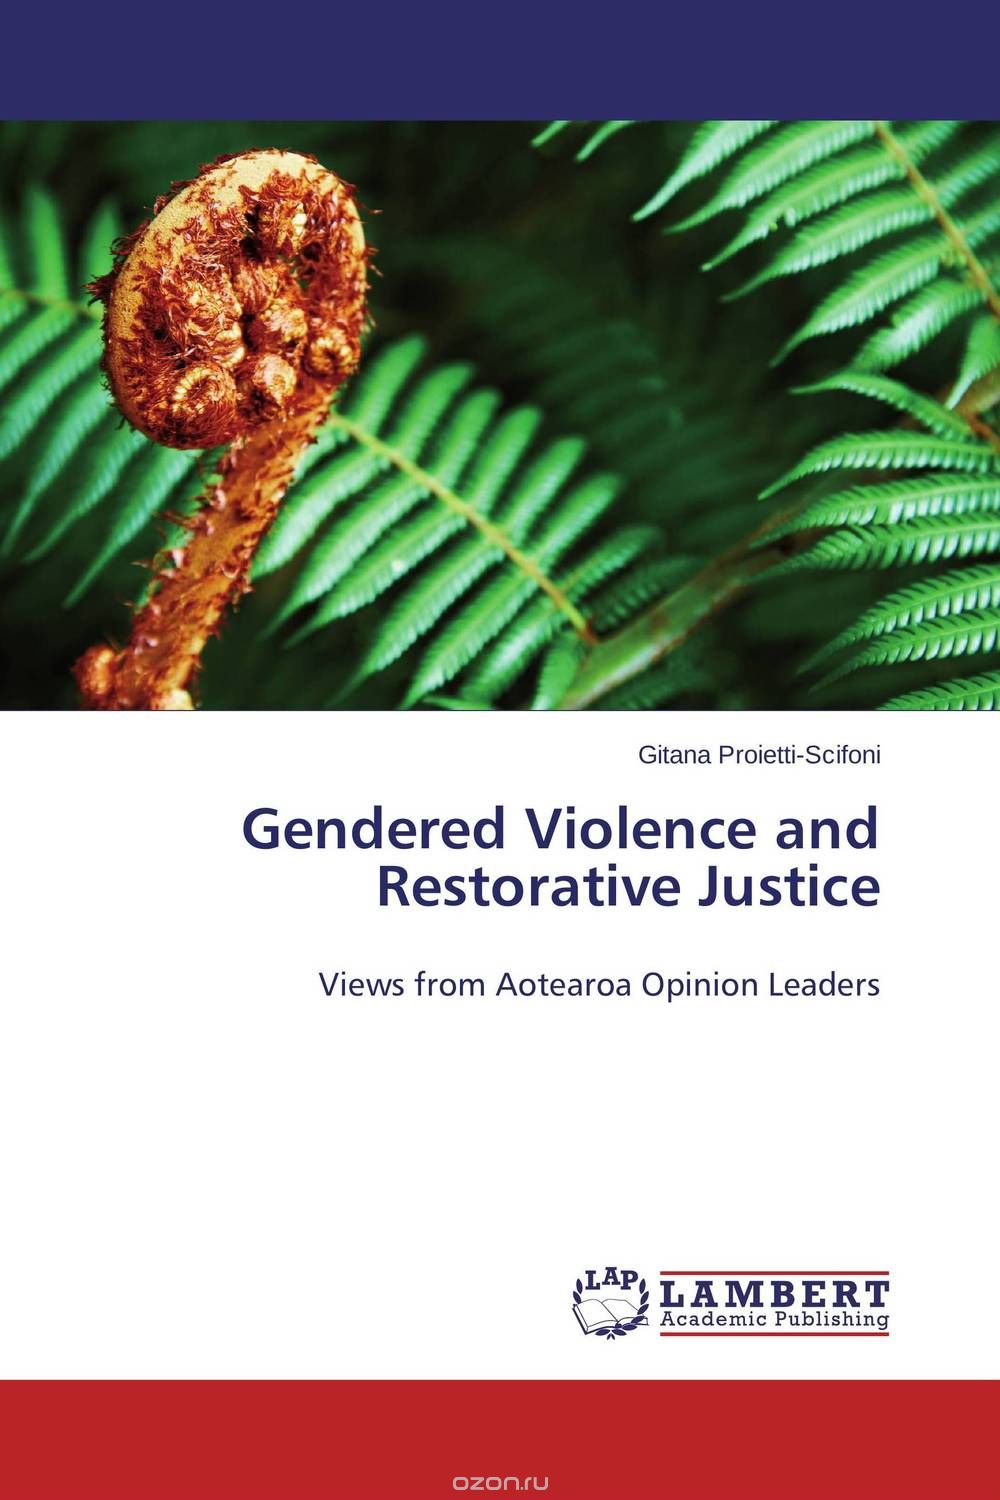 Скачать книгу "Gendered Violence and Restorative Justice"